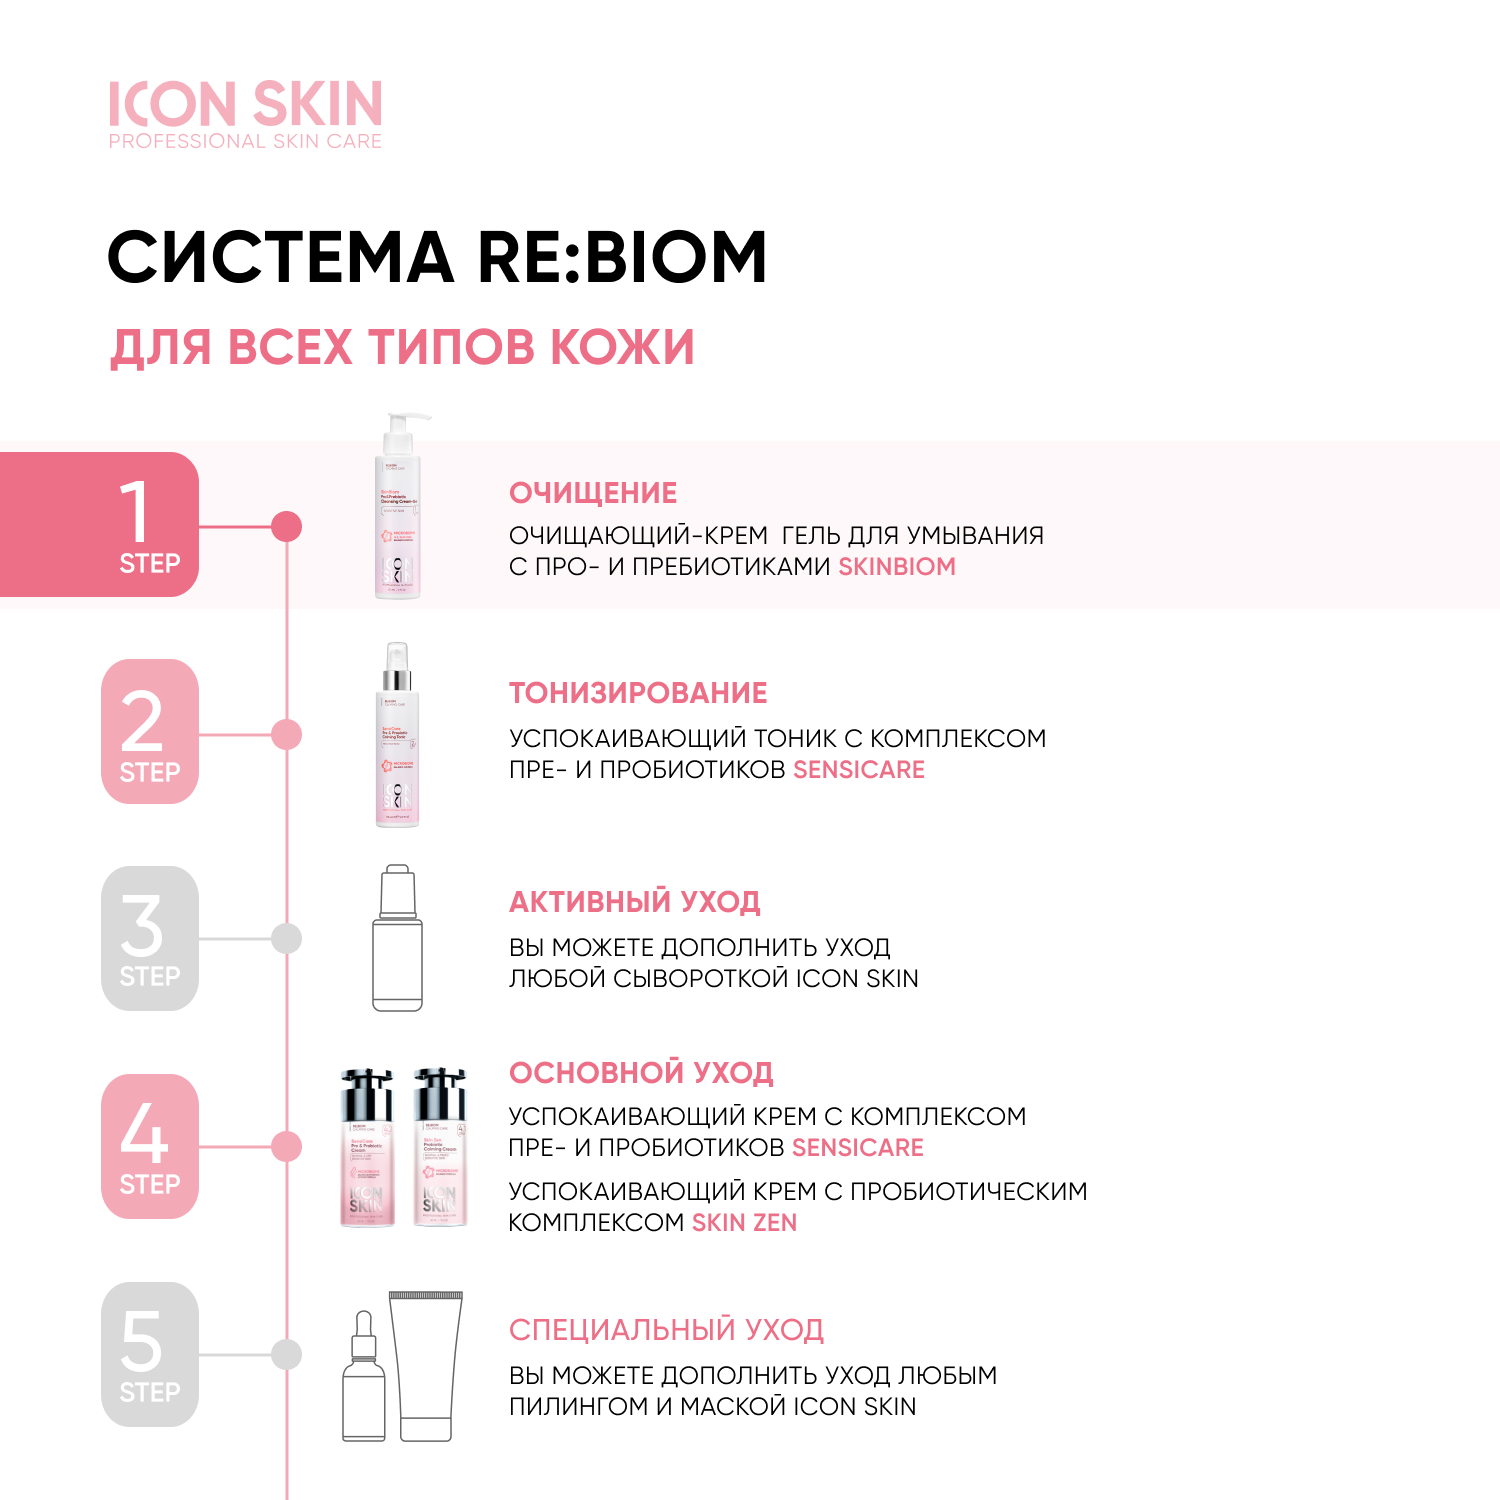 Крем-гель для умывания ICON SKIN очищающий c про- и пребиотиками skinbiom - фото 8